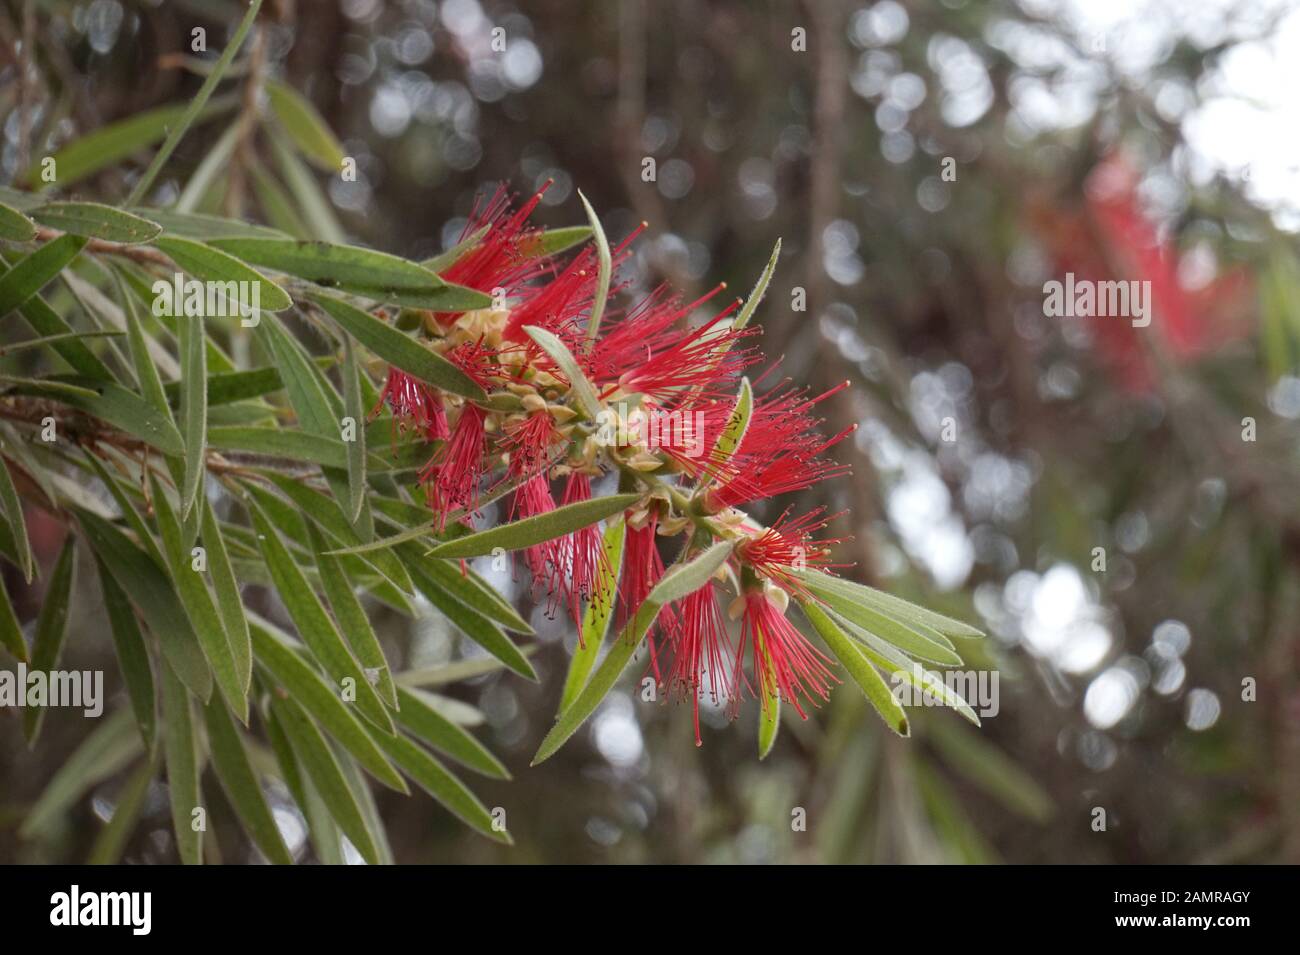 Pohutukawa tree in flower at Maspalomas Botanical Gardens, Gran Canaria Stock Photo